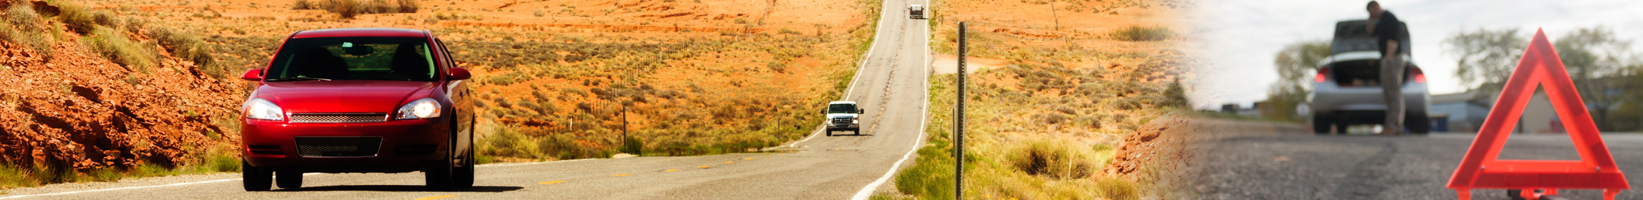 Arizona Road and Roadside Assistance